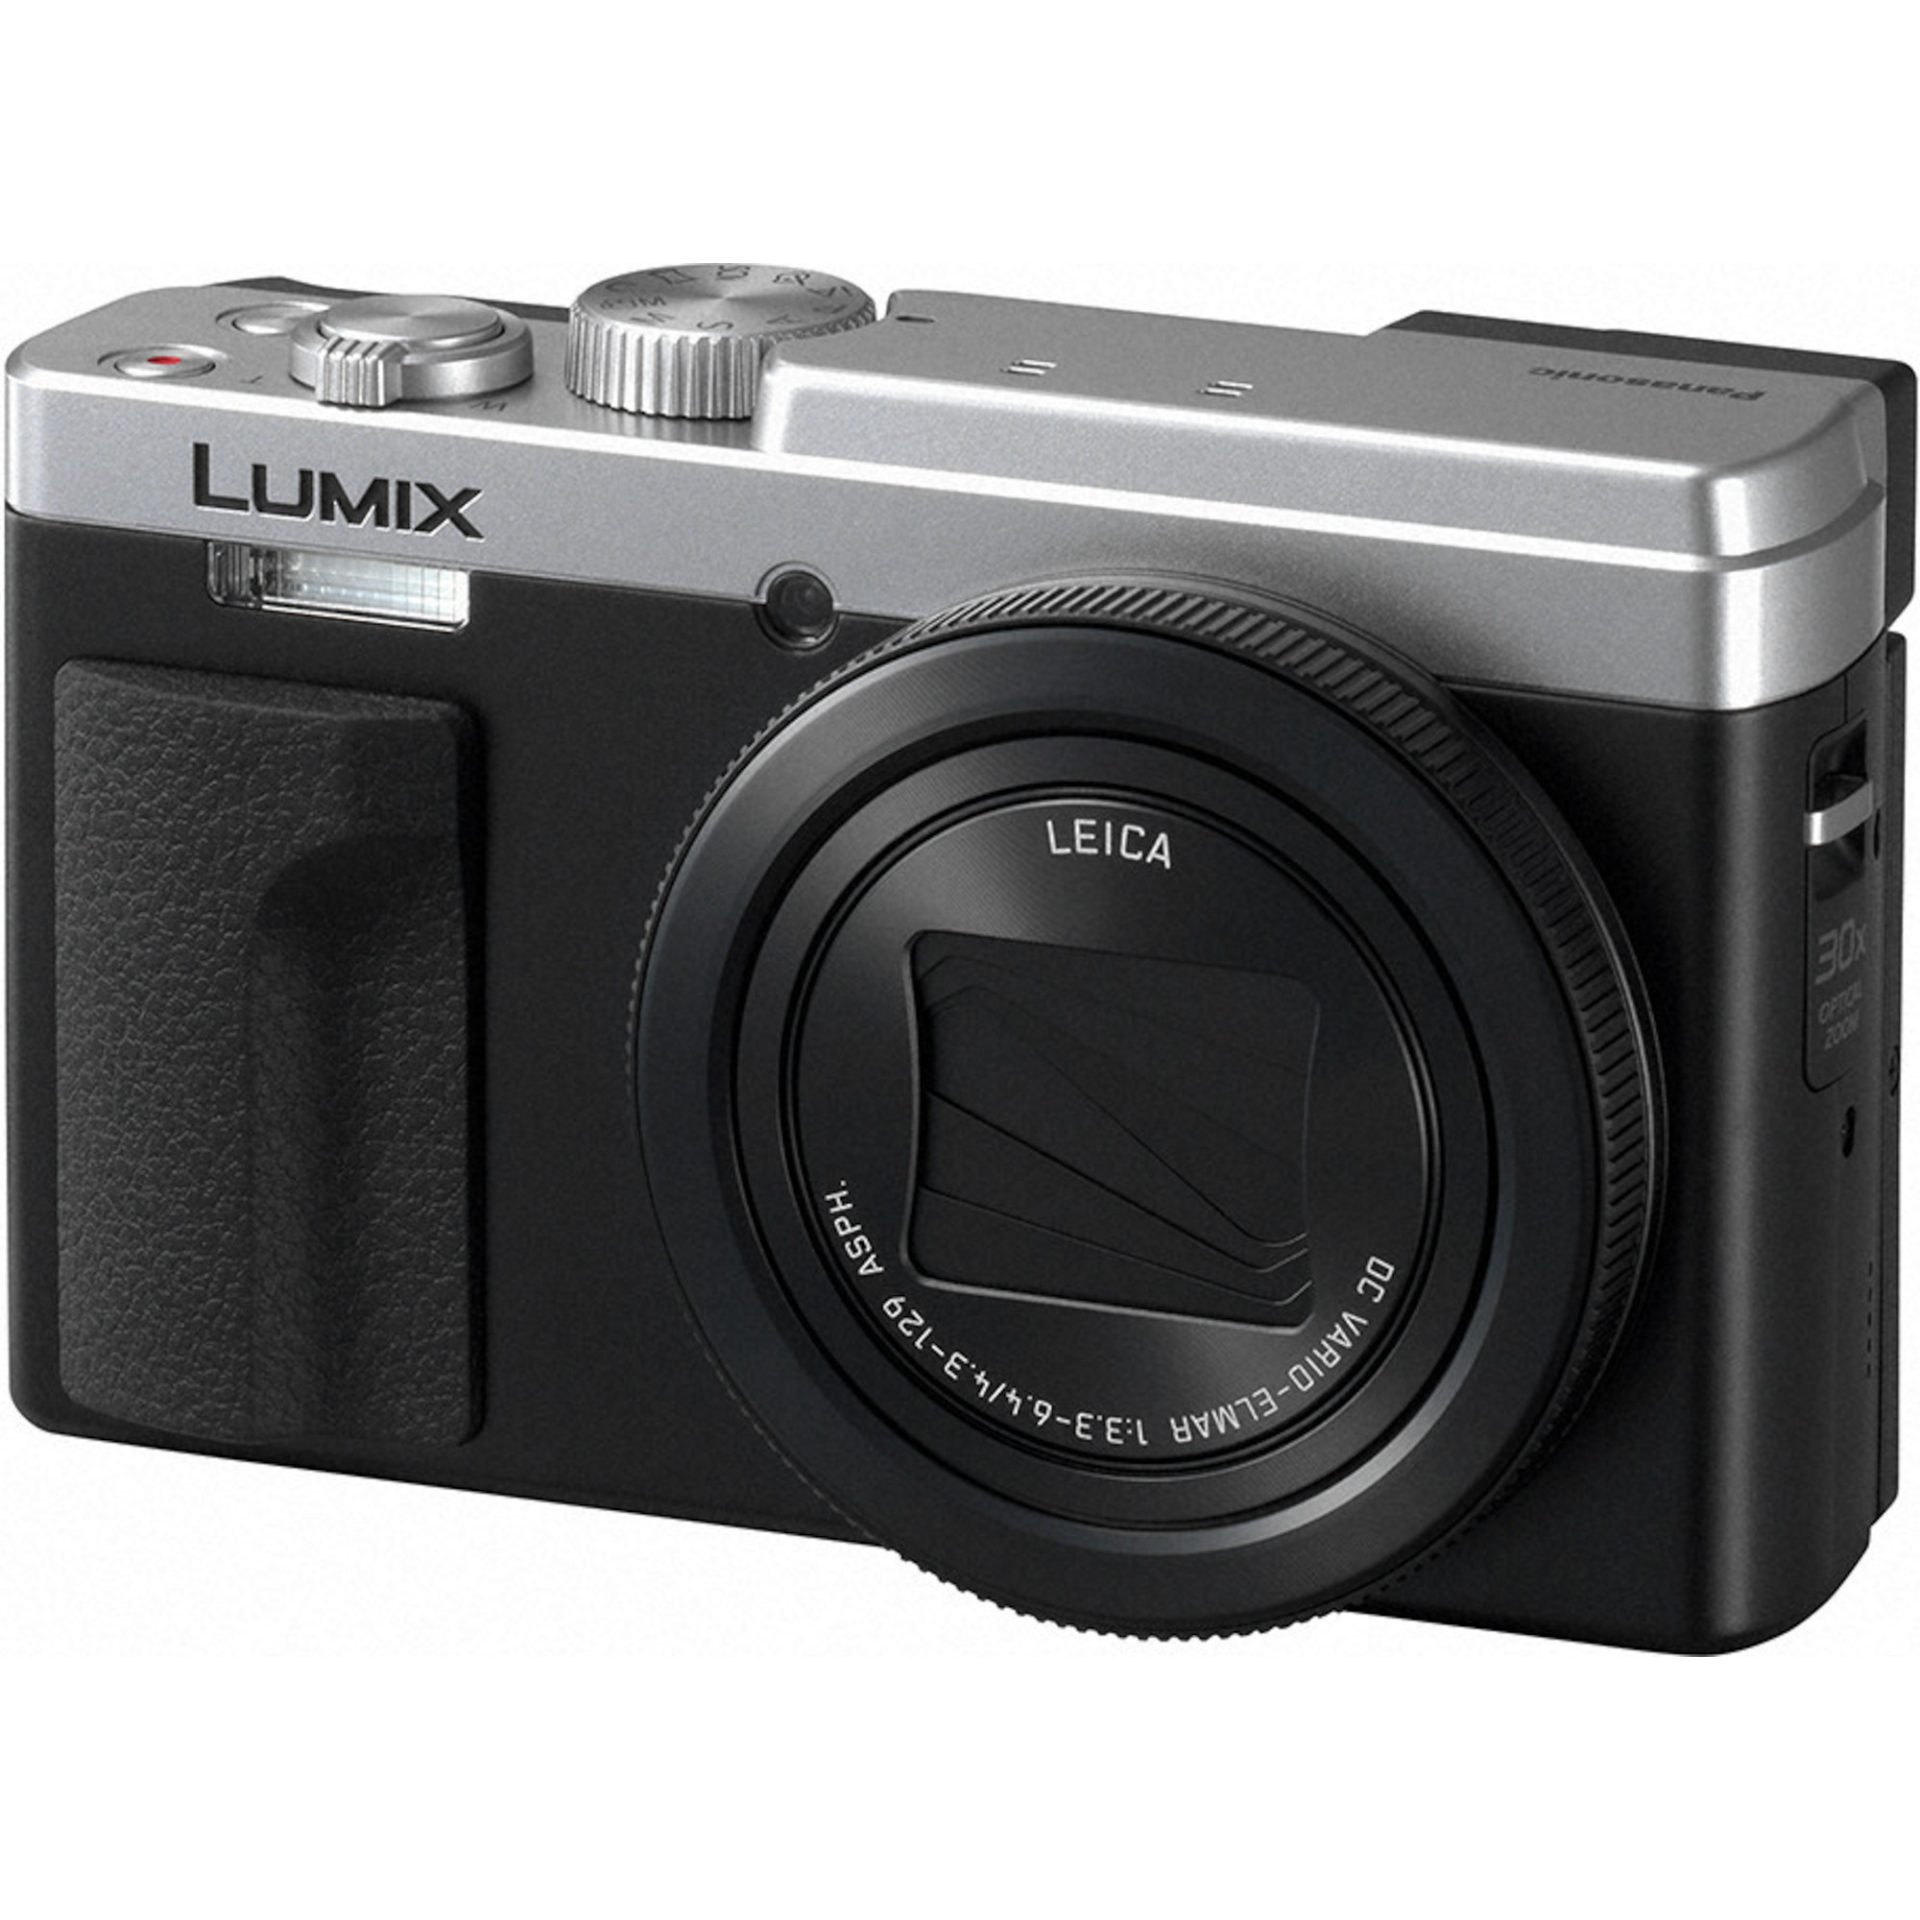 Panasonic DC-TZ95D Lumix fotoaparát (travel) s 30x zoomem (MOS 20.3MP, 4K selfie, 4K video, Post Focus, LVF hledáček 2330k pt), černobíle a stříbrně